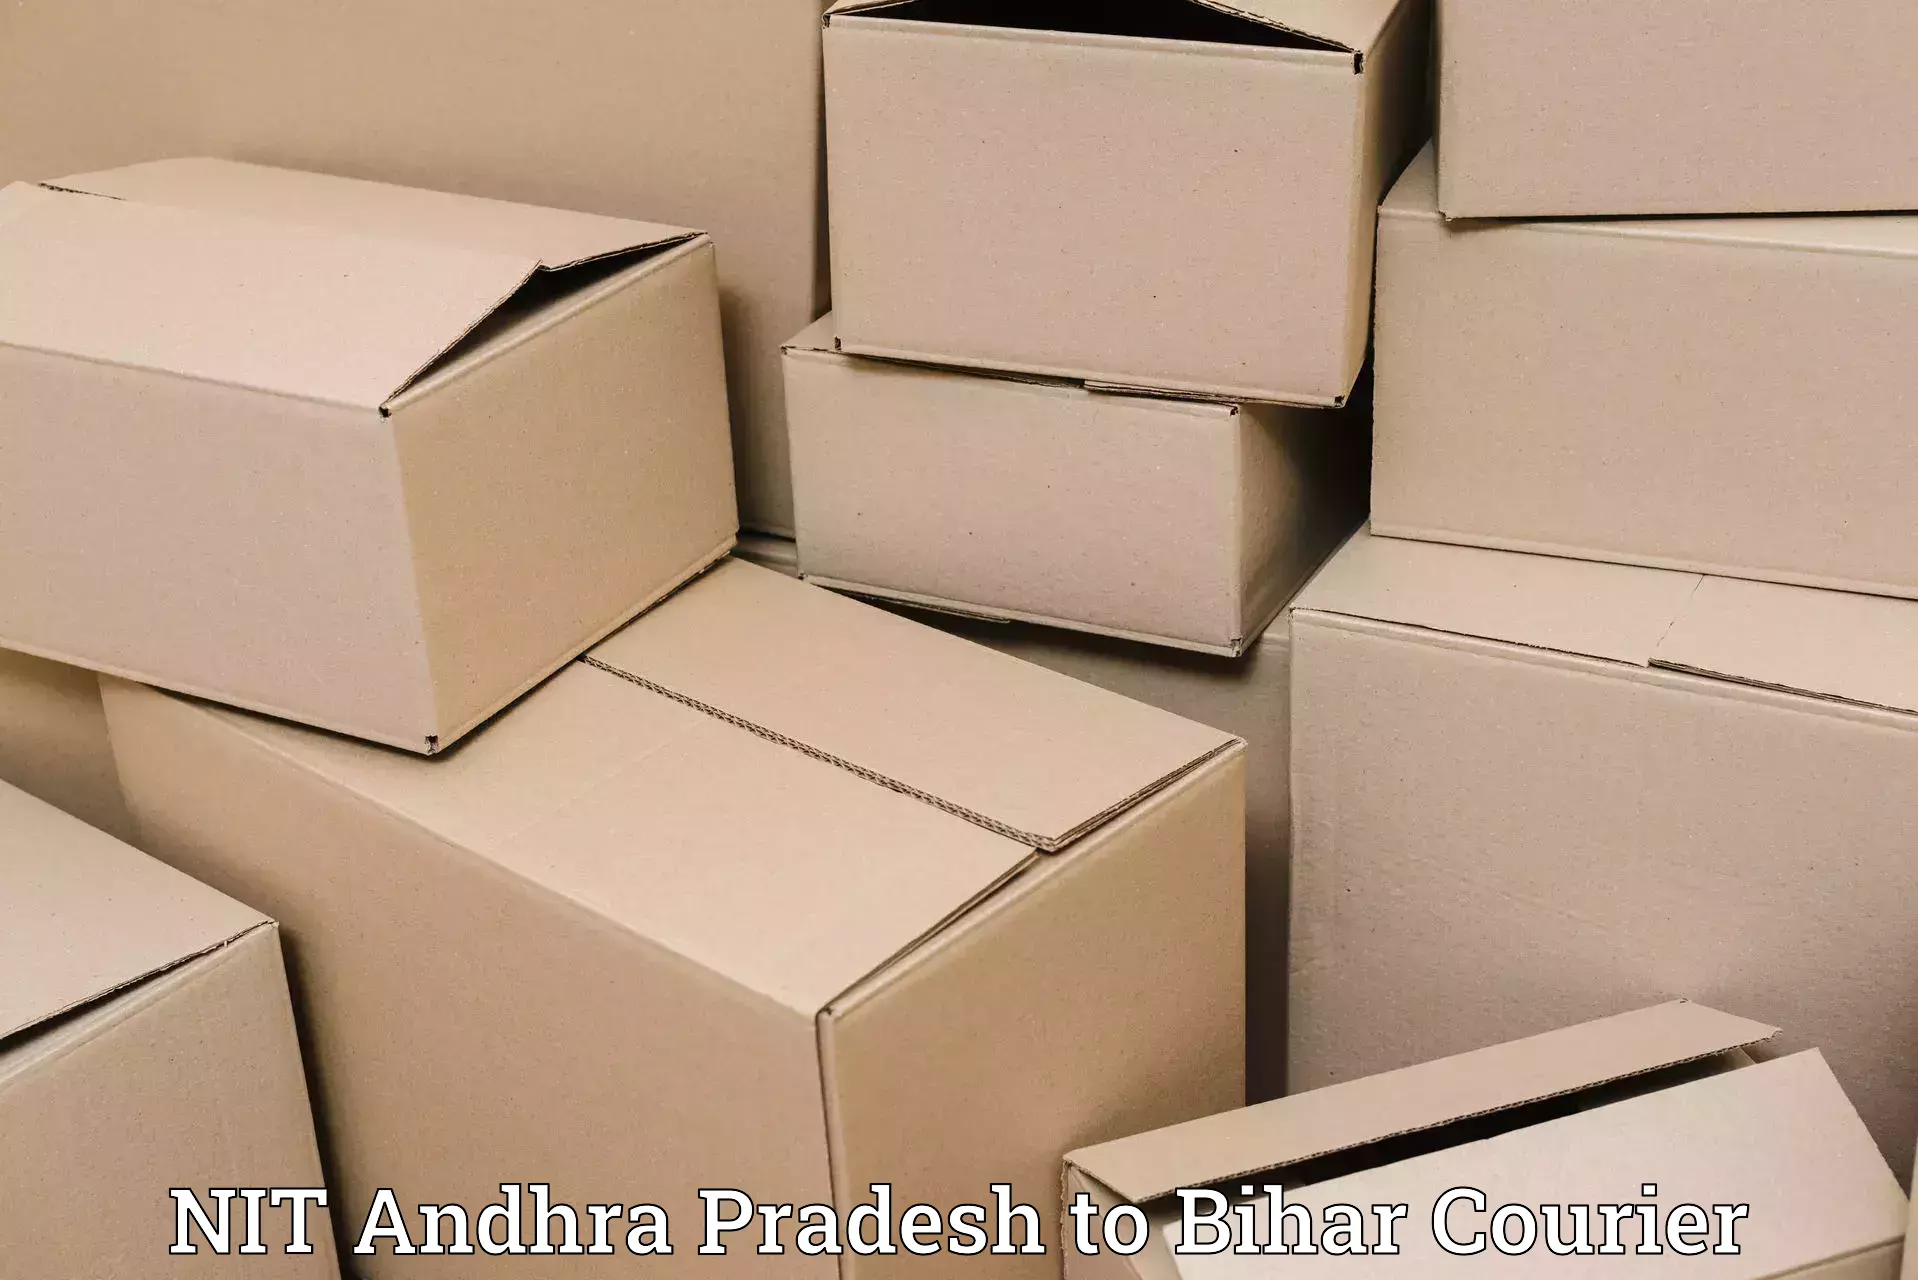 Seamless shipping experience in NIT Andhra Pradesh to Bankipore